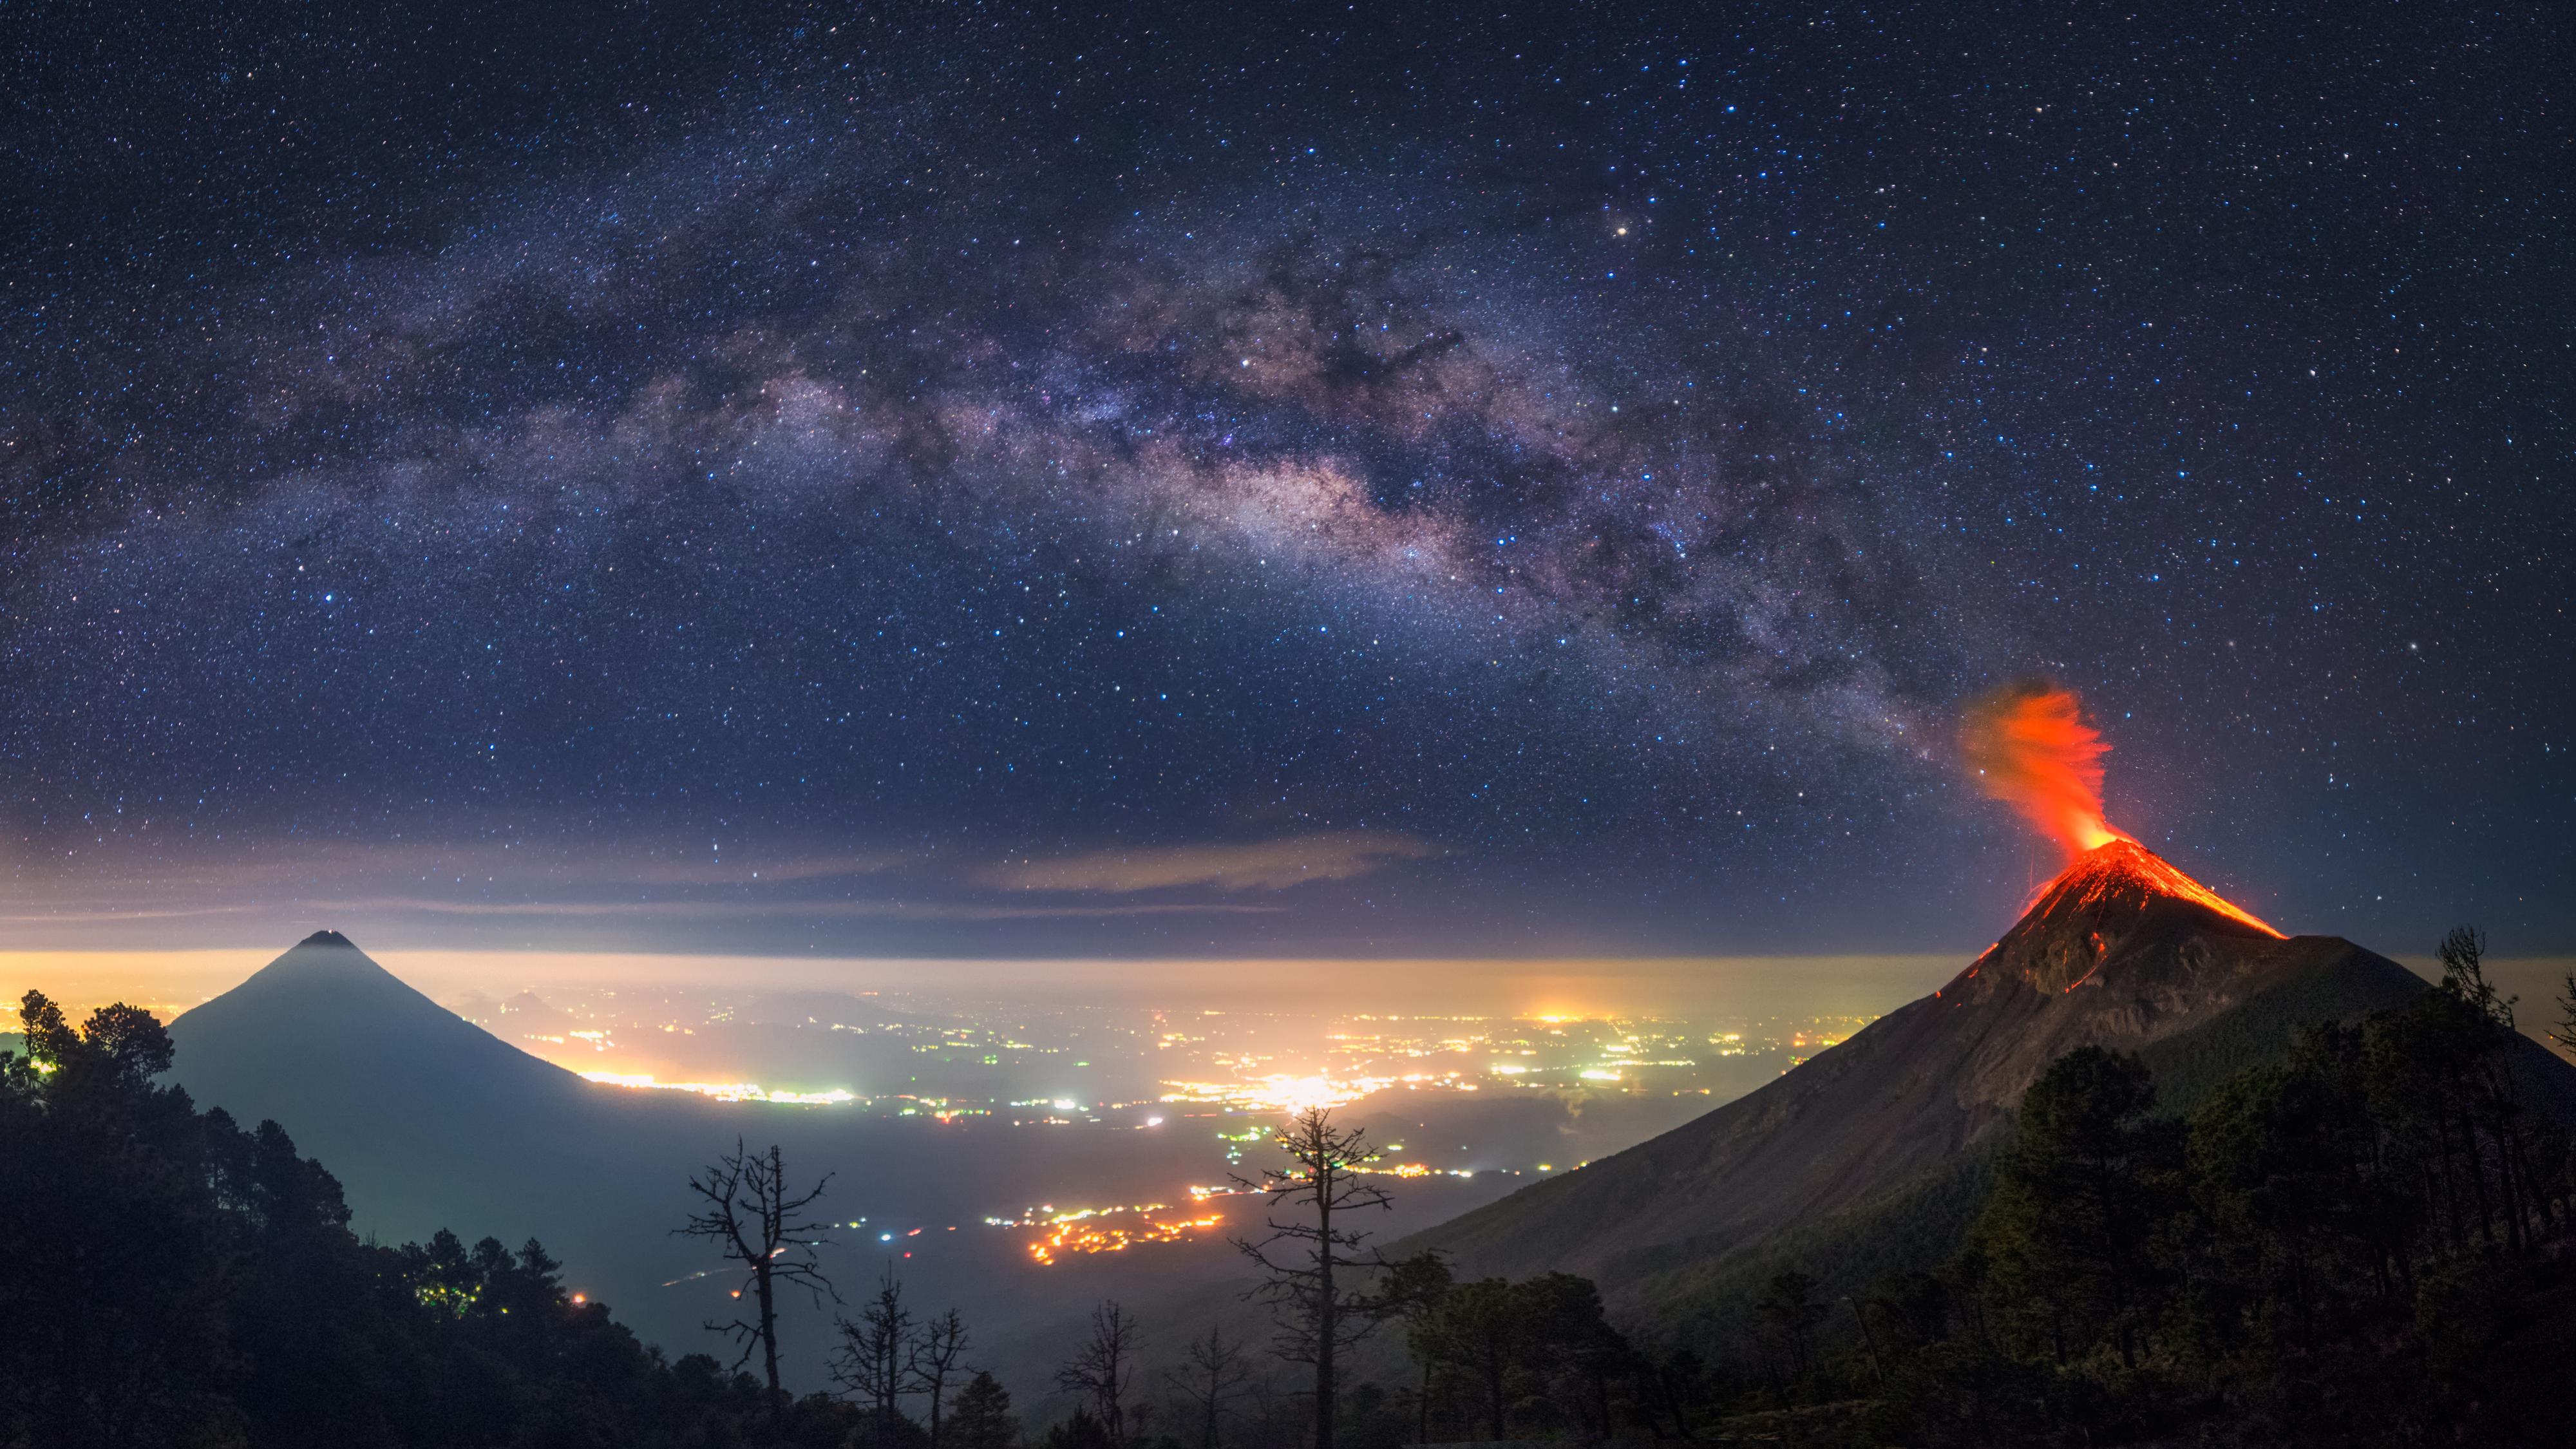 General 4000x2250 volcano eruption Guatemala Milky Way landscape eruptions city mountains night night sky stars galaxy photography low light